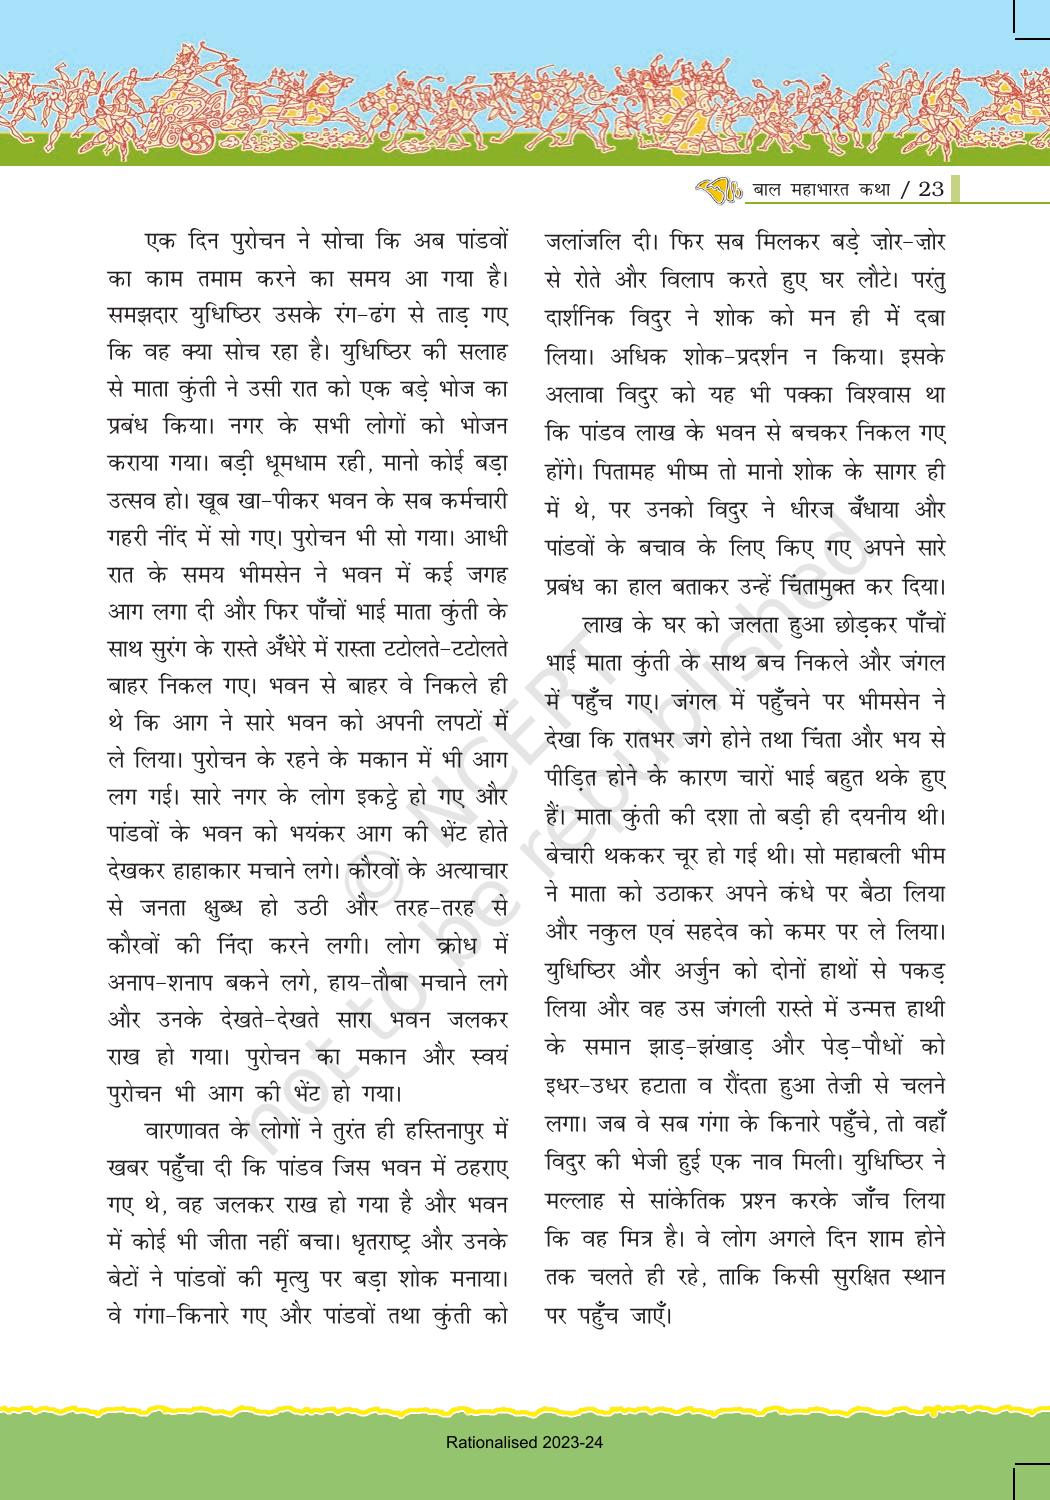 NCERT Book for Class 7 Hindi: Chapter 1-बाल महाभारत कथा - Page 23